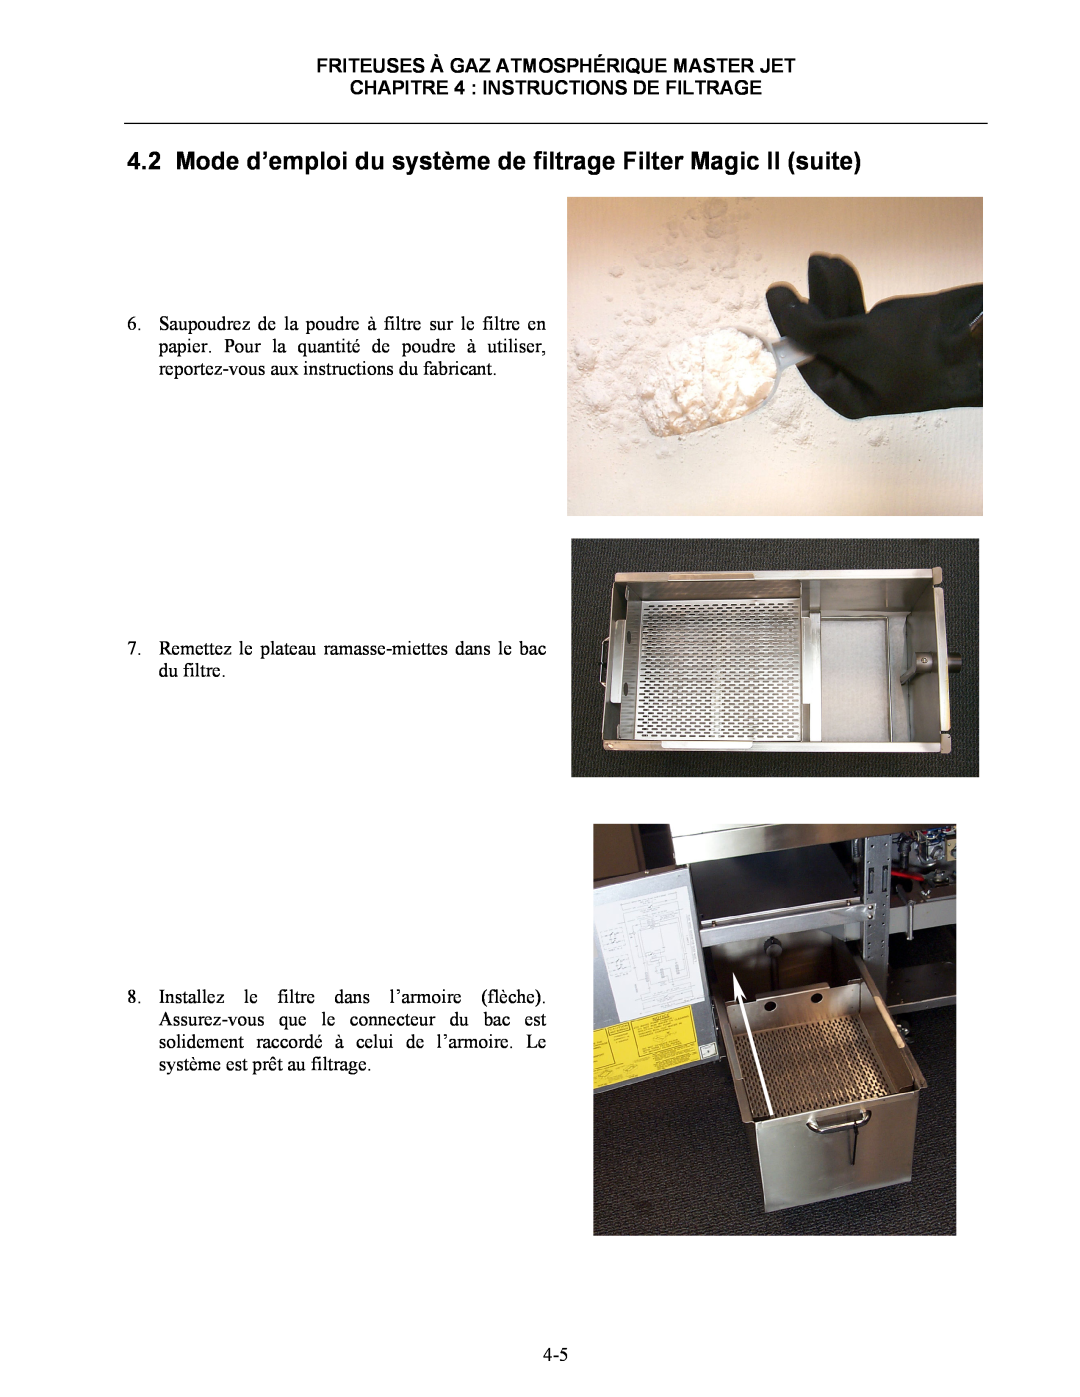 Frymaster CF manual Mode d’emploi du système de filtrage Filter Magic II suite, Friteuses À Gaz Atmosphérique Master Jet 